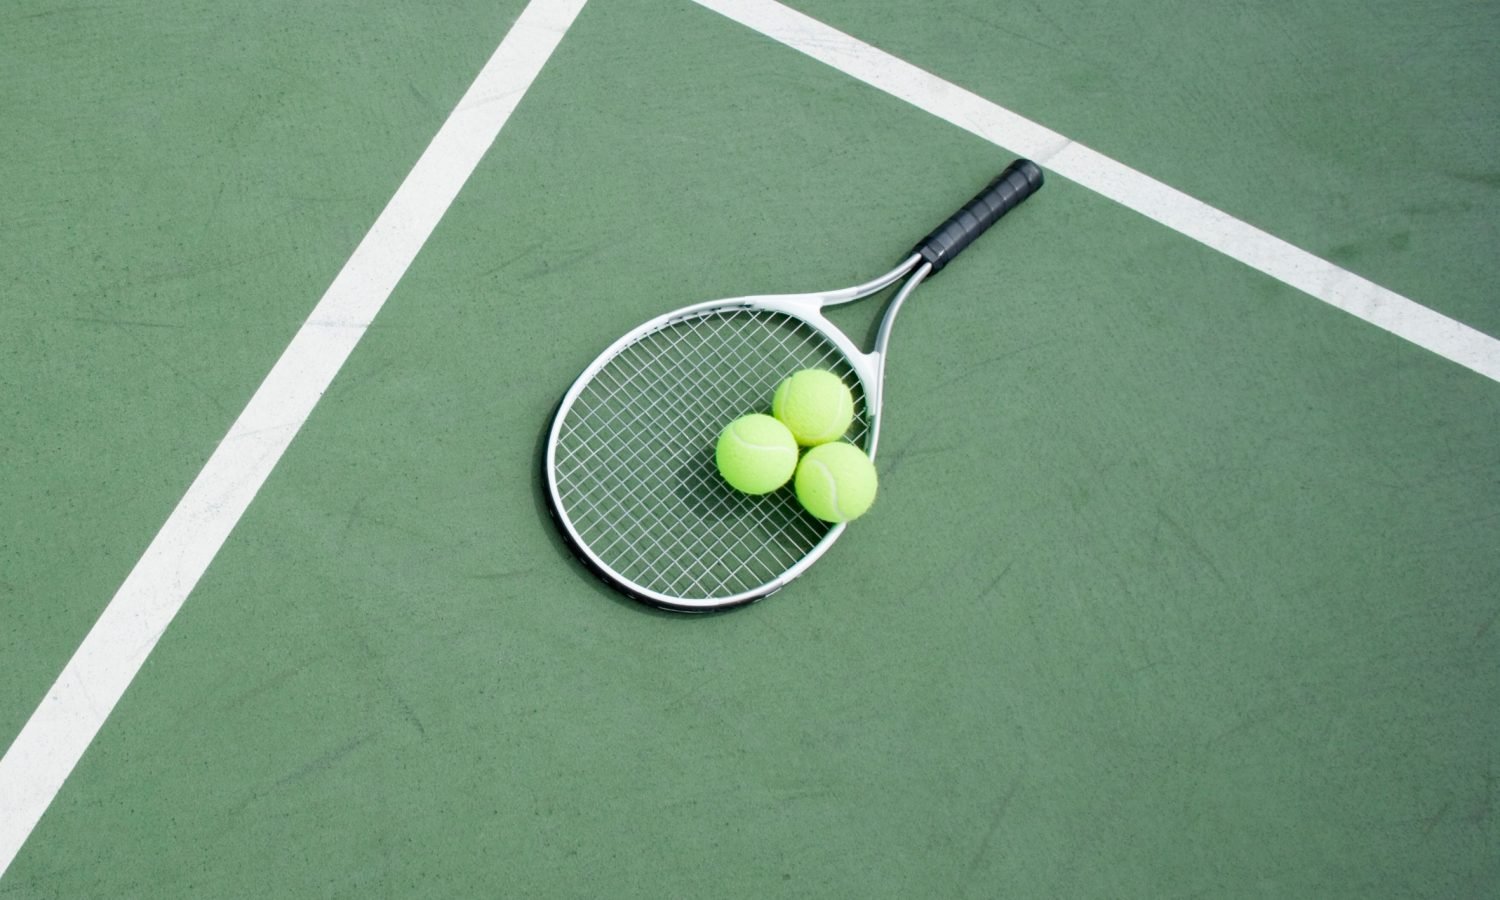 42295-tennis-court-stock